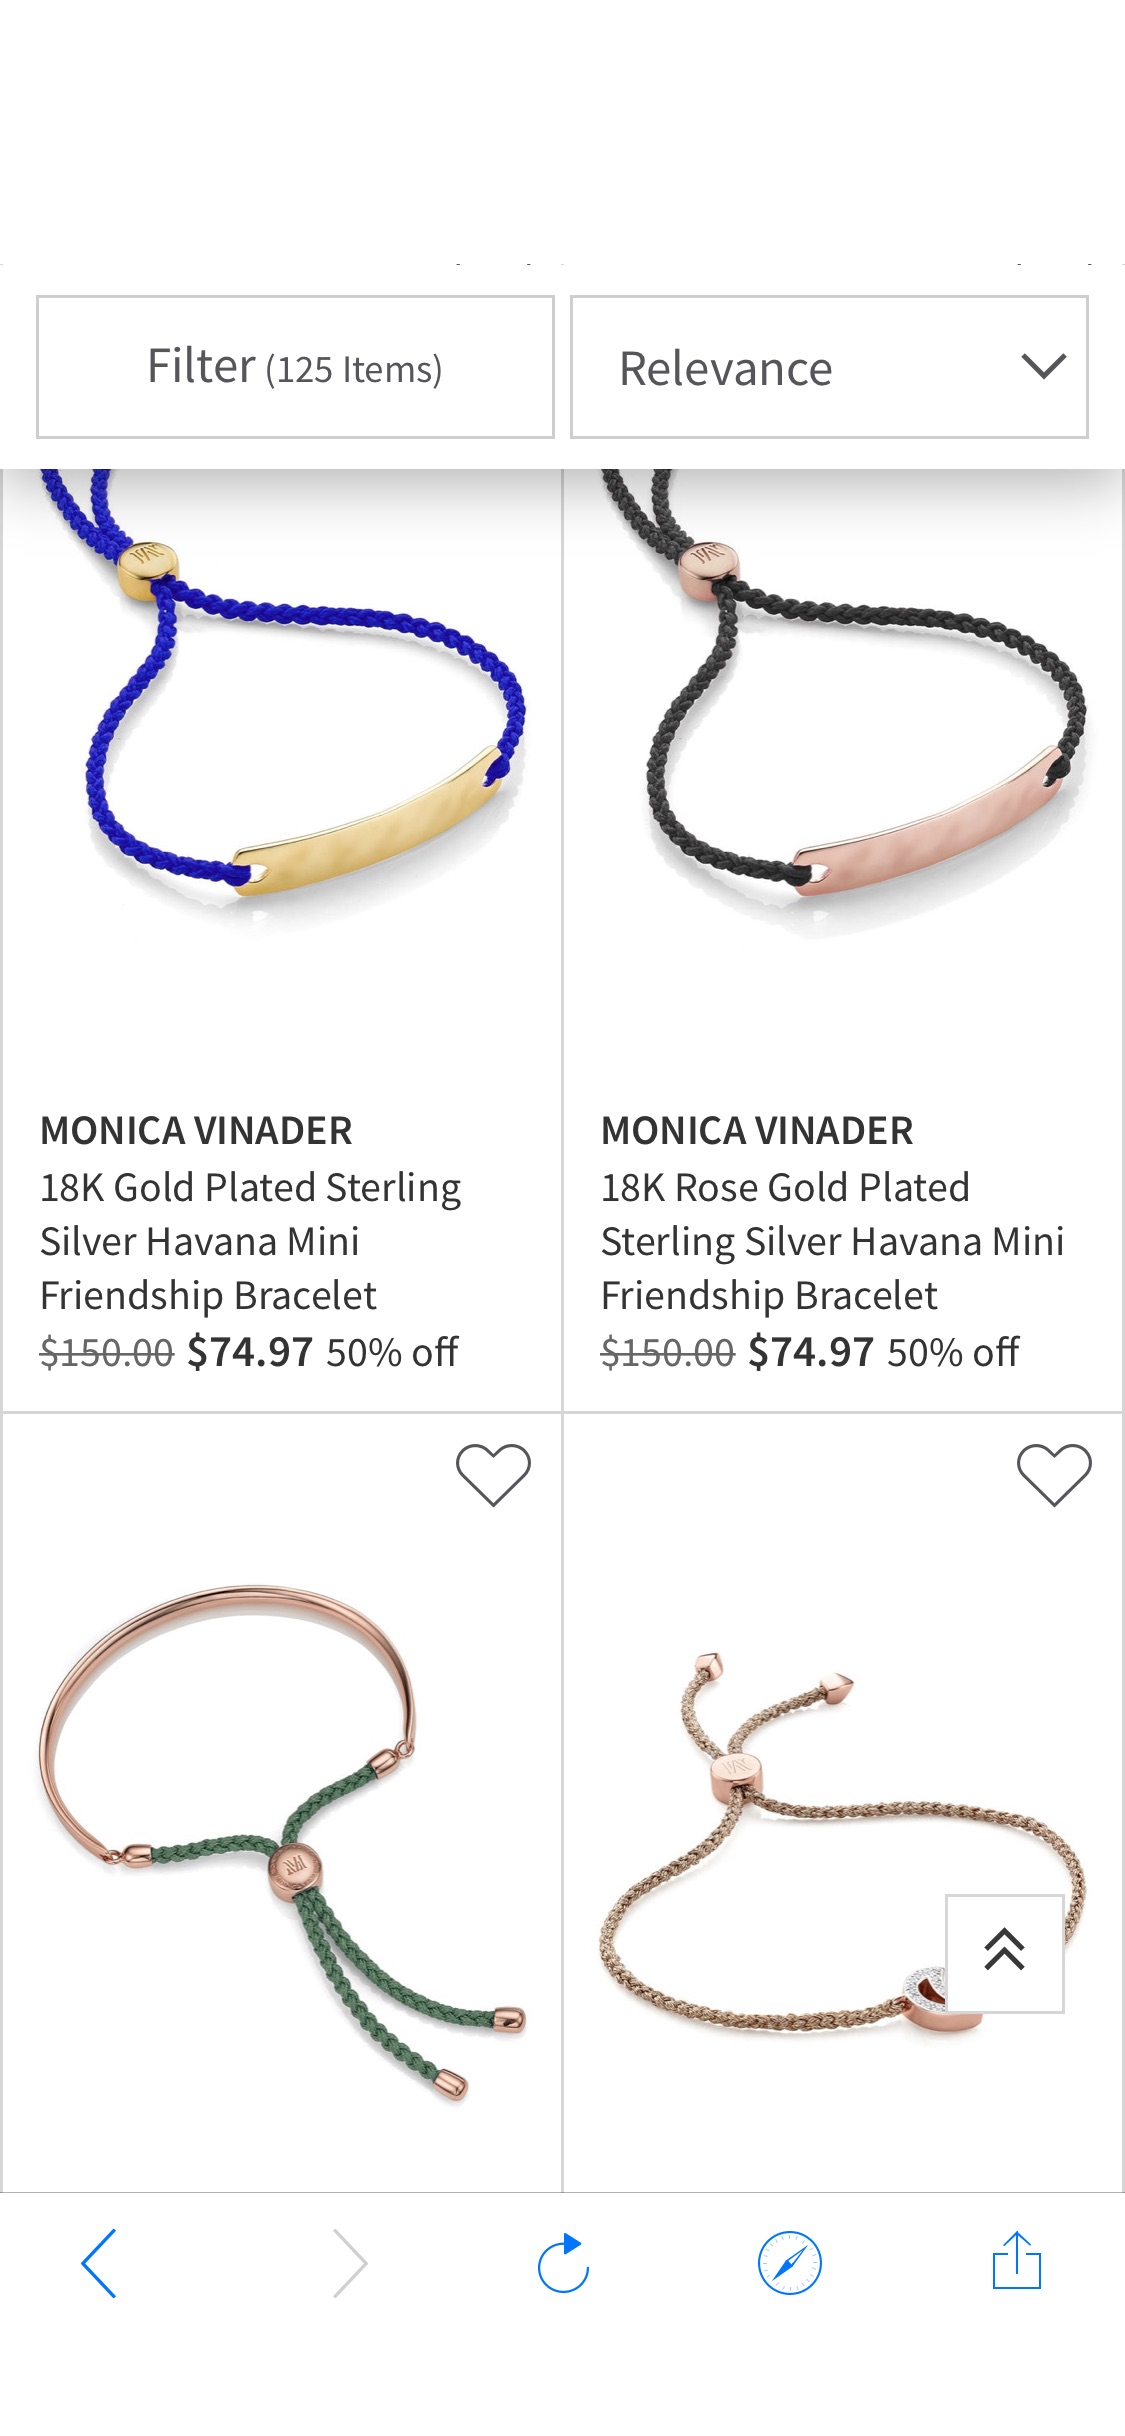 Nordstrom Rack Online & In Store: Shop Dresses, Shoes, Handbags, Jewelry & More

Monica Vinader 全场对折